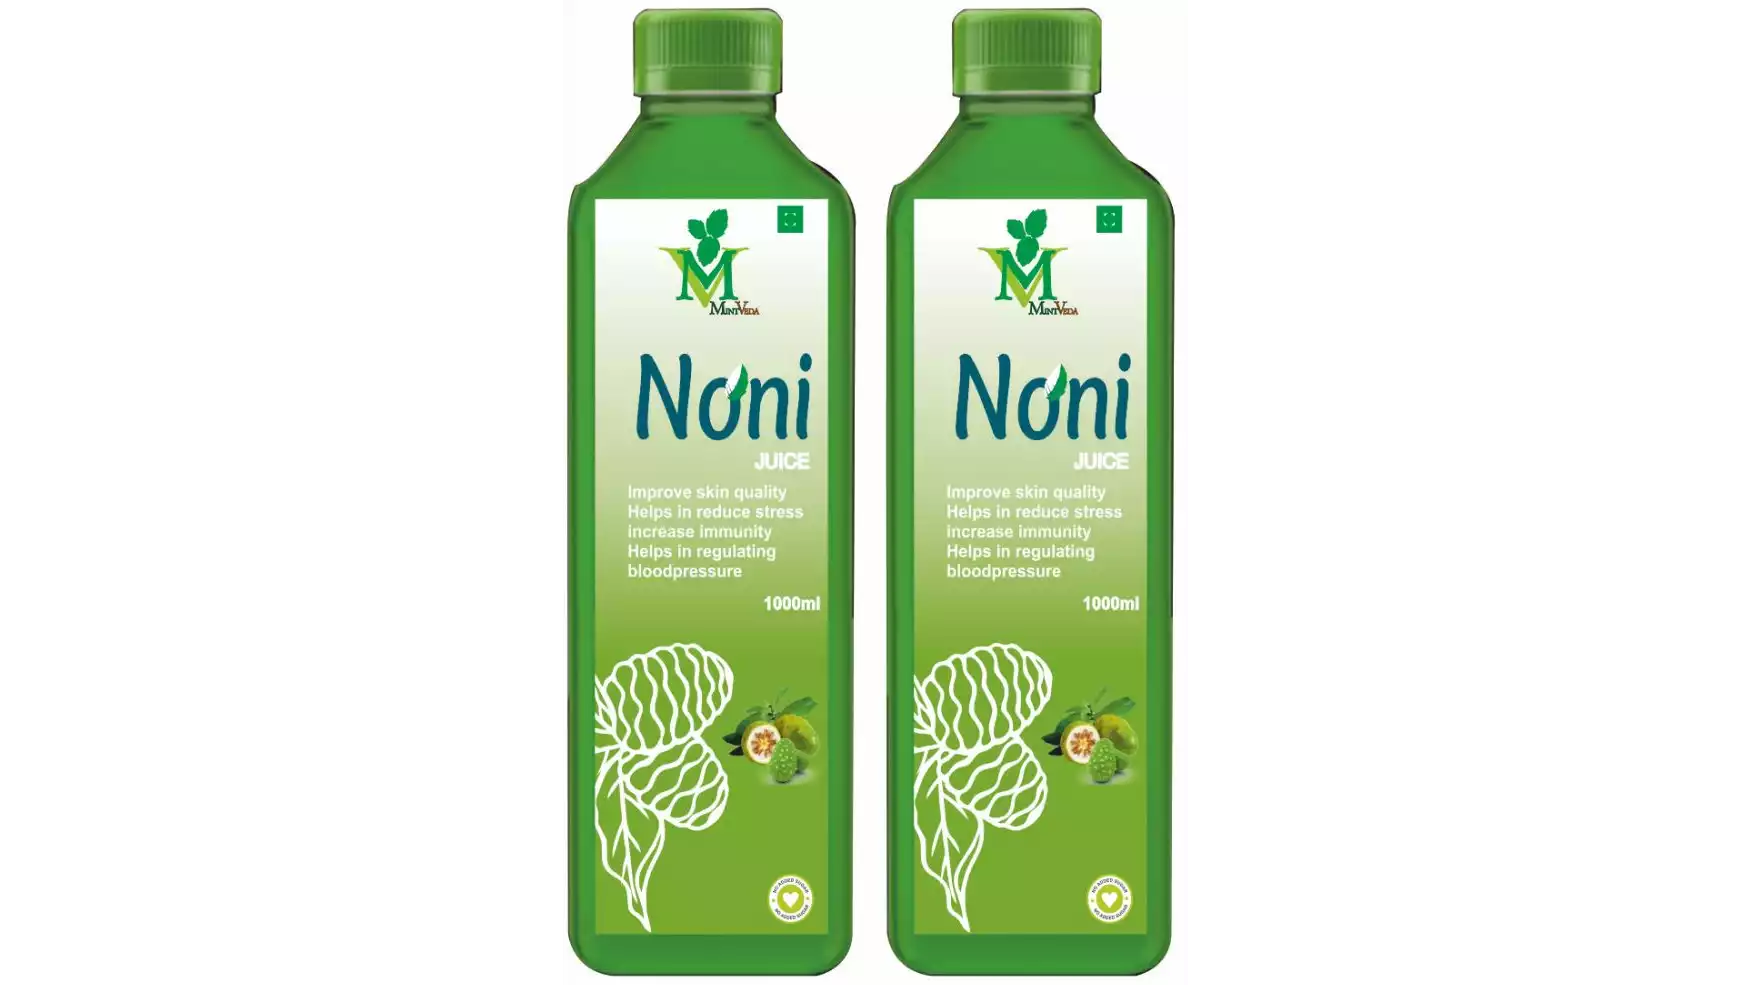 Mint Veda Noni (Sugar Free) Juice (1liter, Pack of 2)